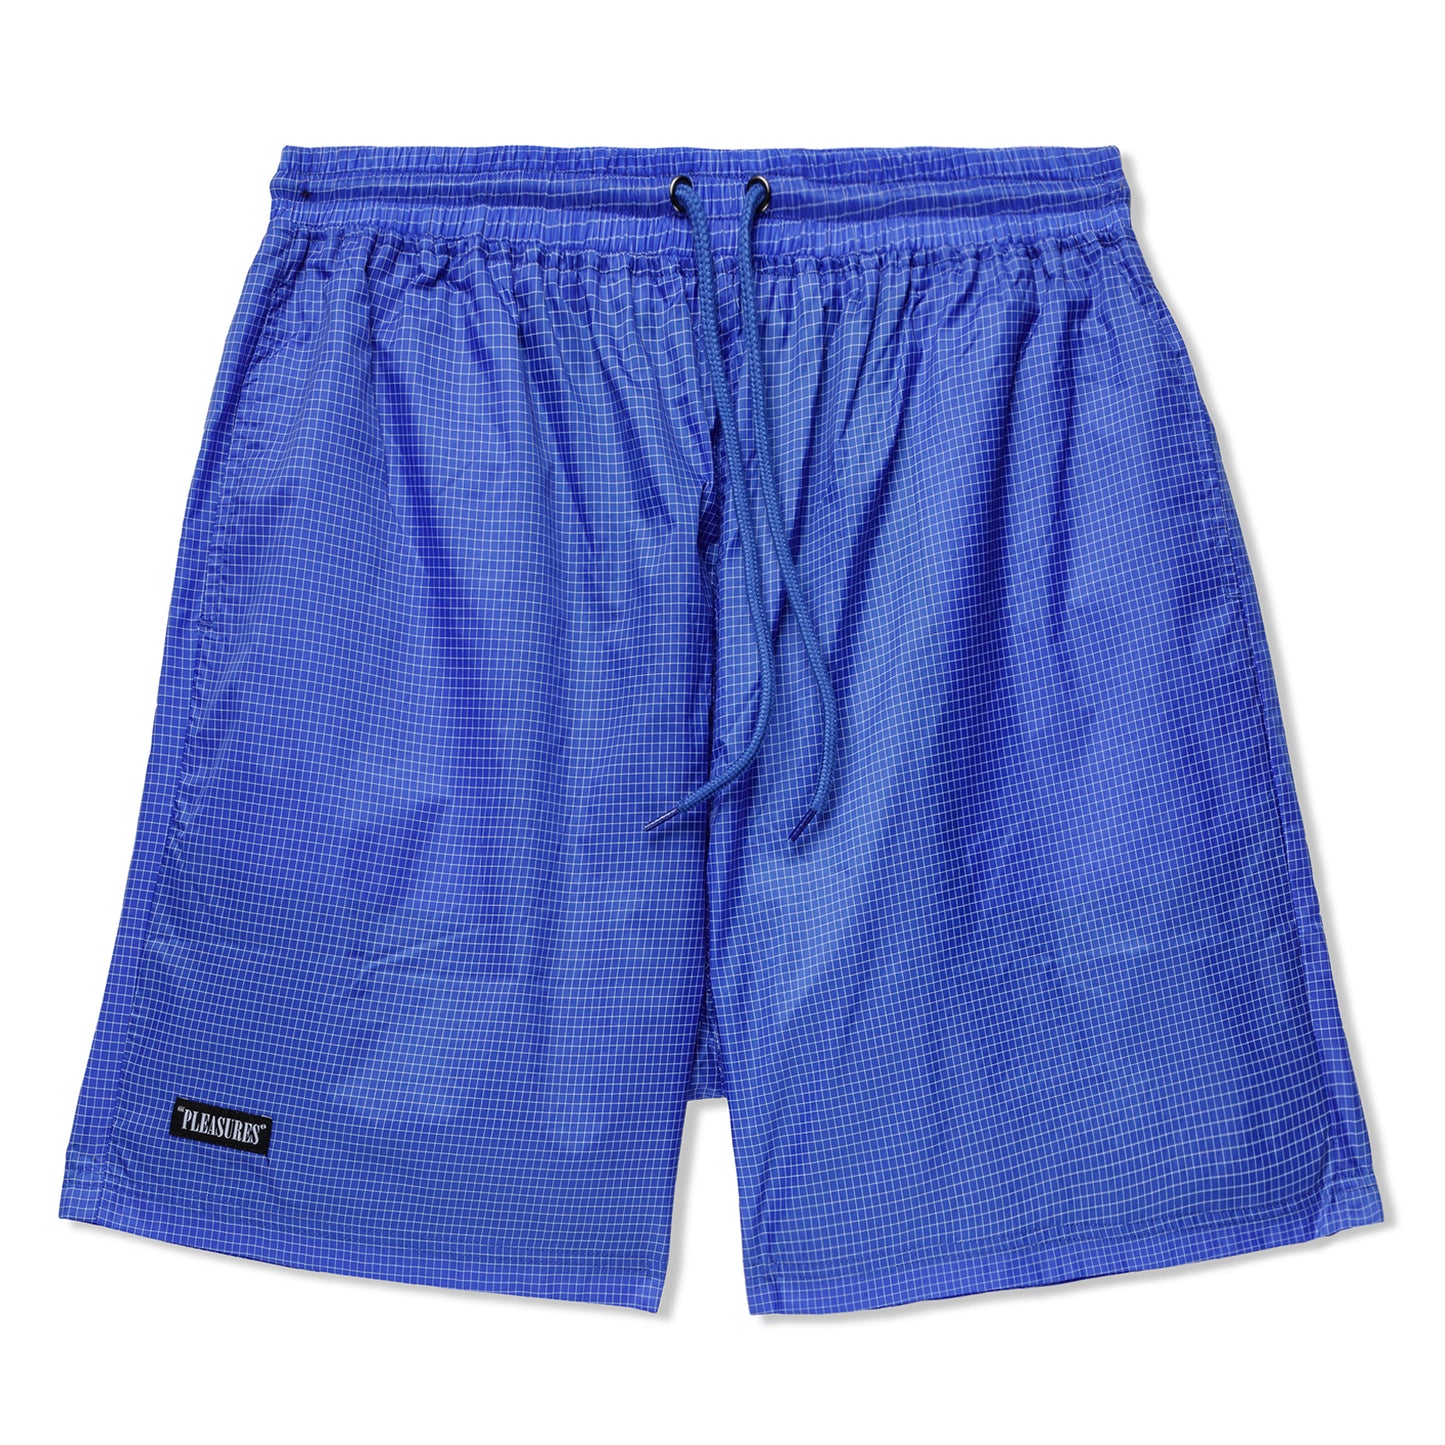 Pleasures Brick Active Shorts (Blue)